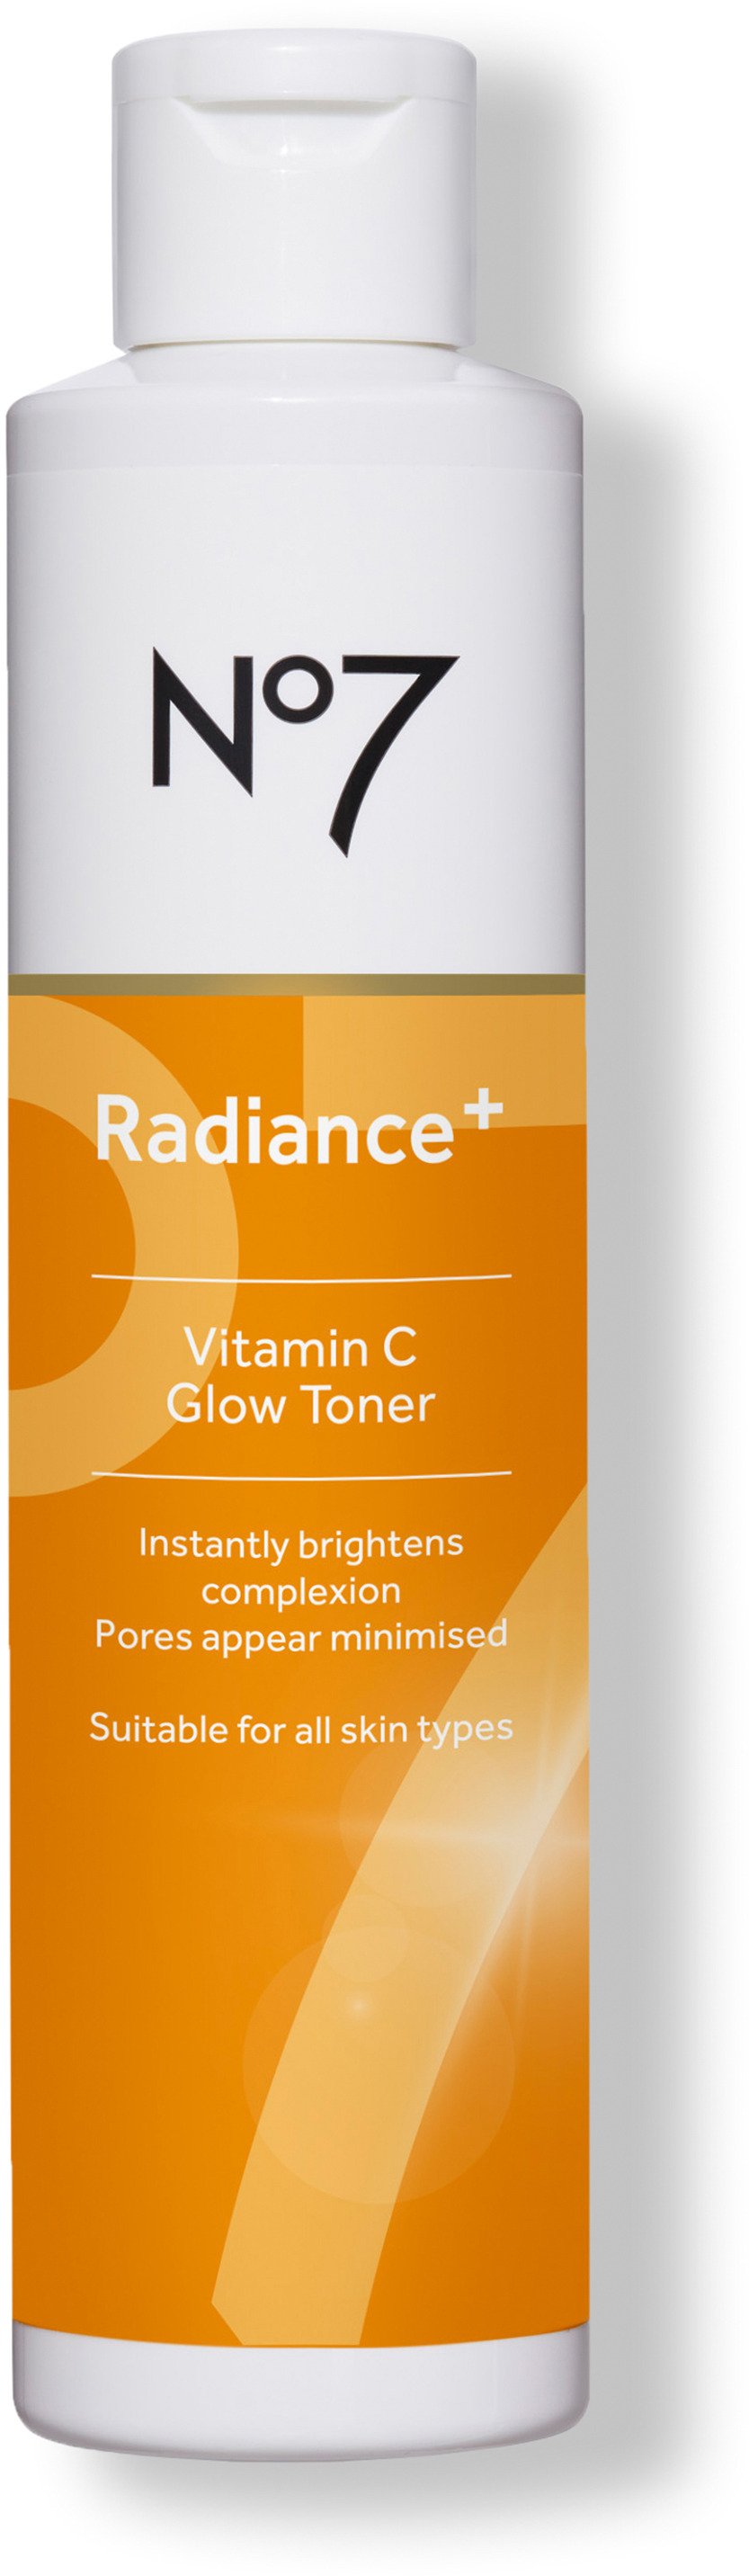 No7 Radiance+ Vitamin C Glow Toner 200 ml